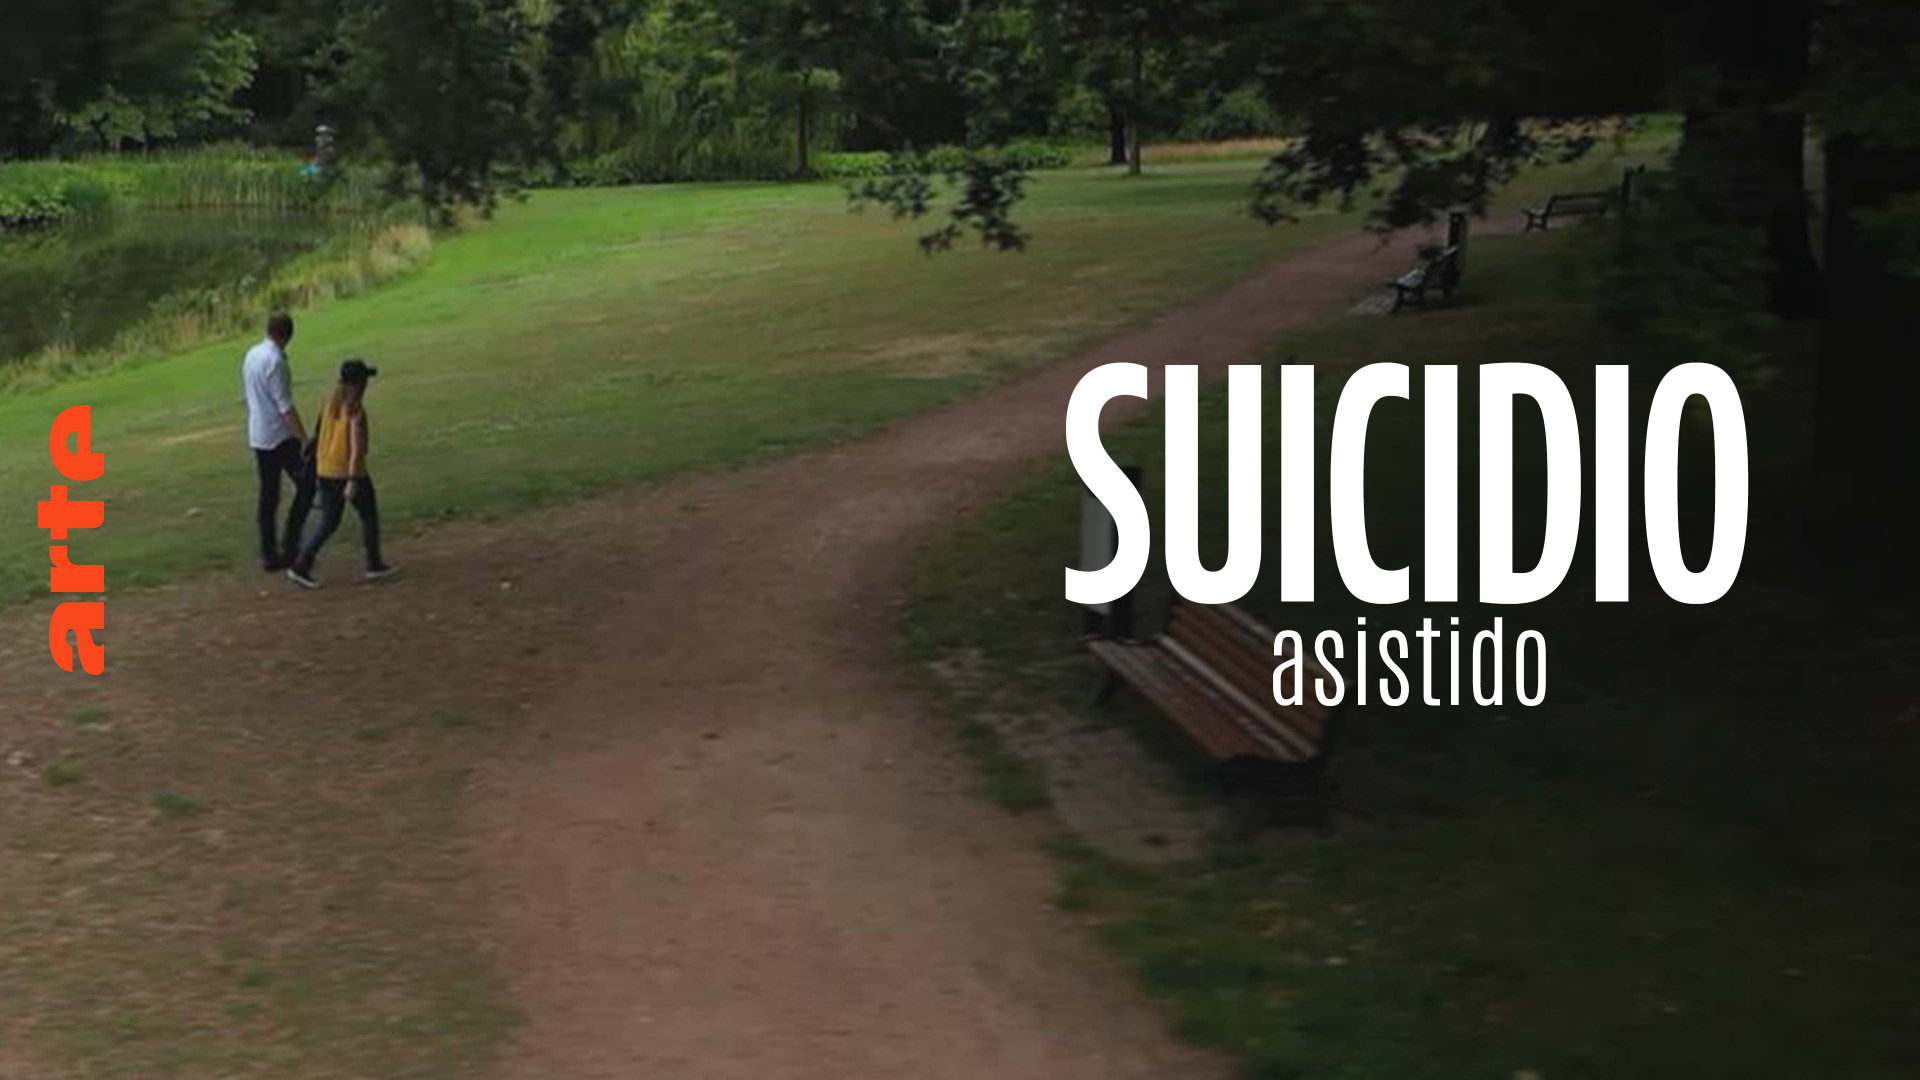 Caratula de Re: Selbstbestimmt sterben - Sterbehilfe auf dem Prüfstand (ARTE Regards: Suicidio asistido) 